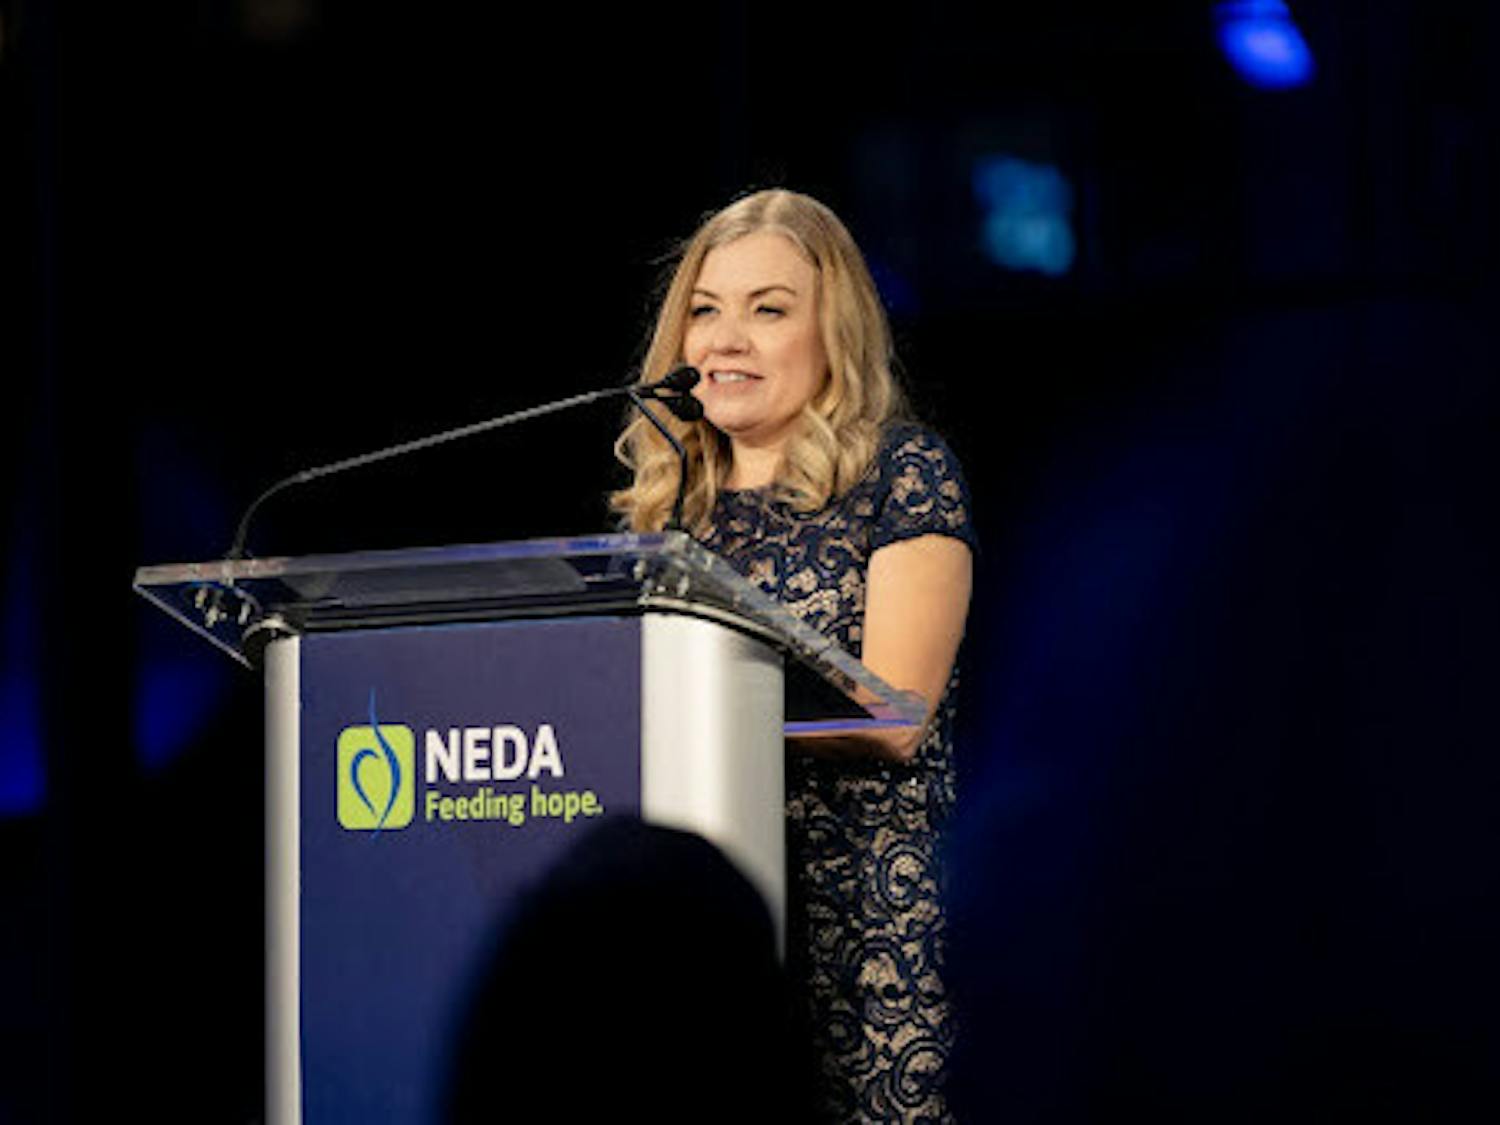 Doreen Marshall speaking at the NEDA Gala (Photo courtesy of Doreen Marshall).